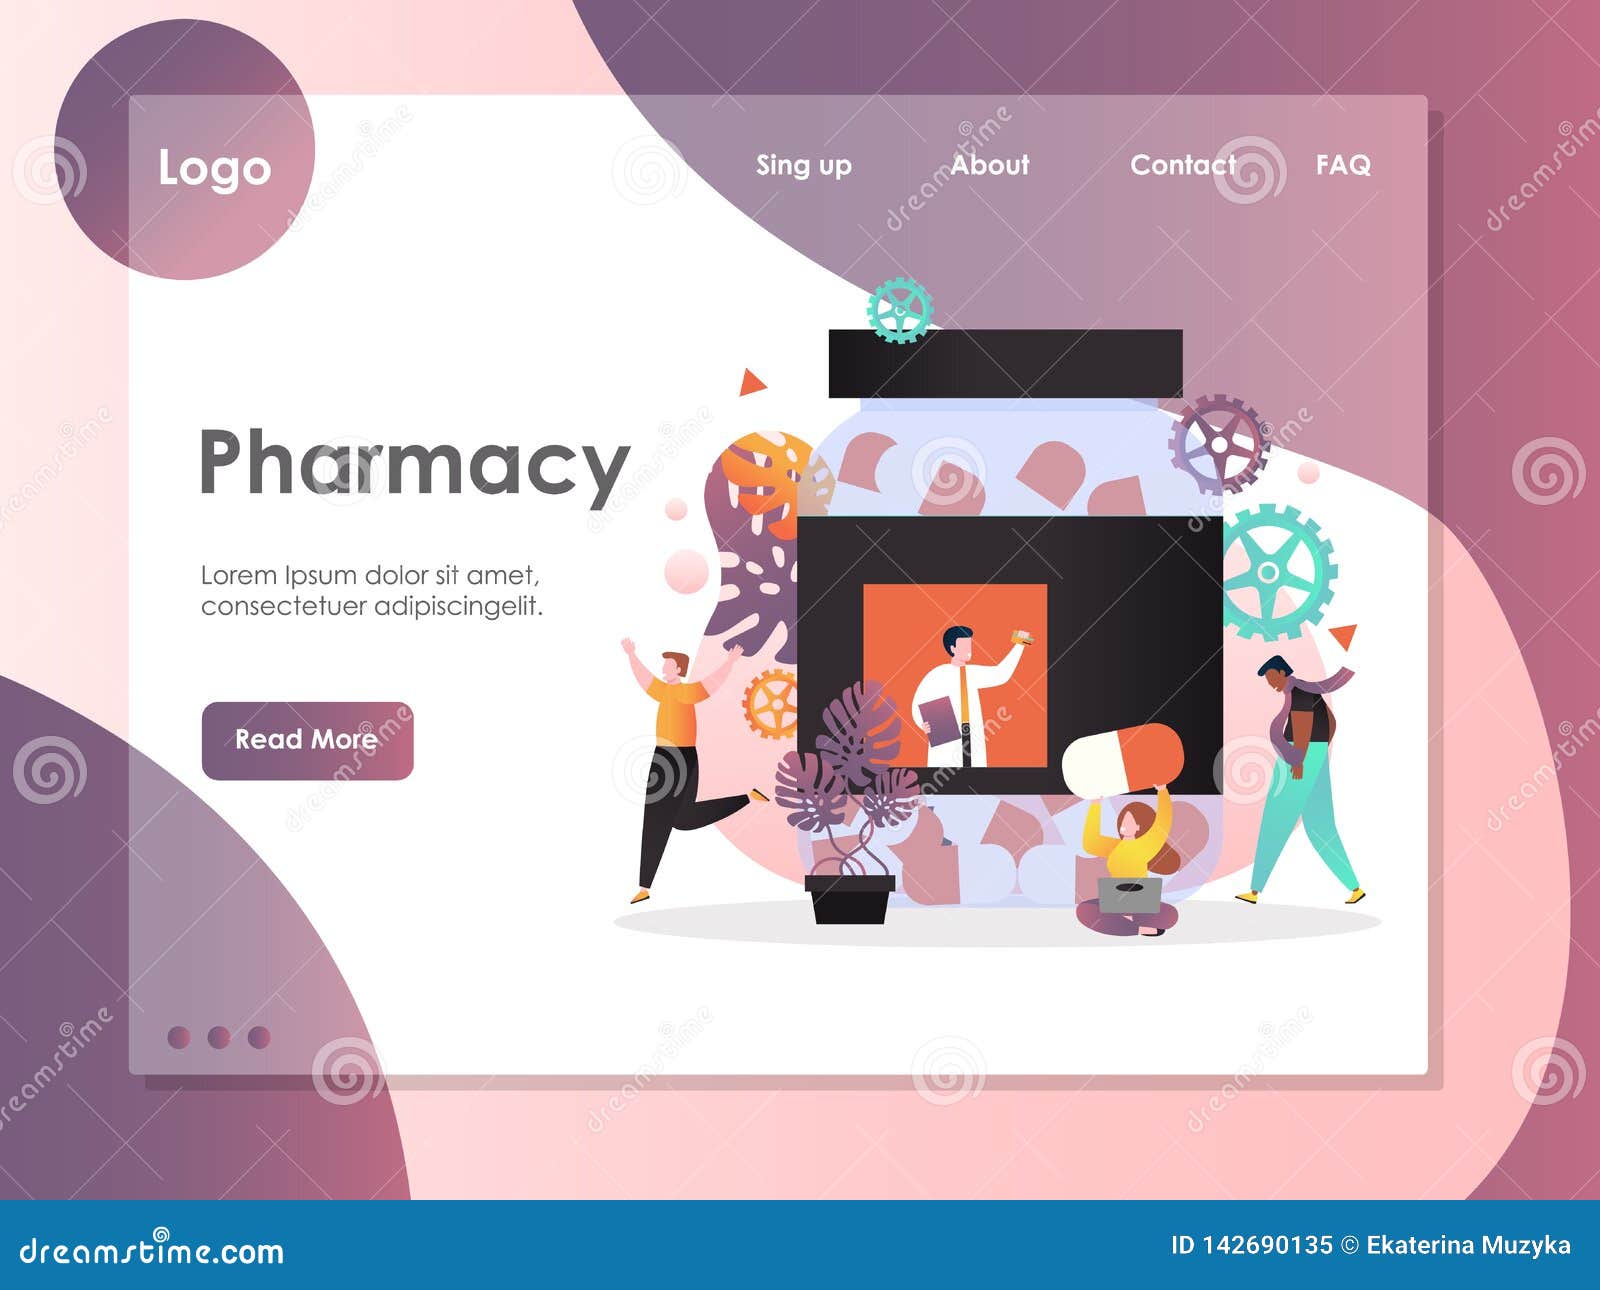 Pharmacy Vector Website Landing Page Design Template Stock Vector